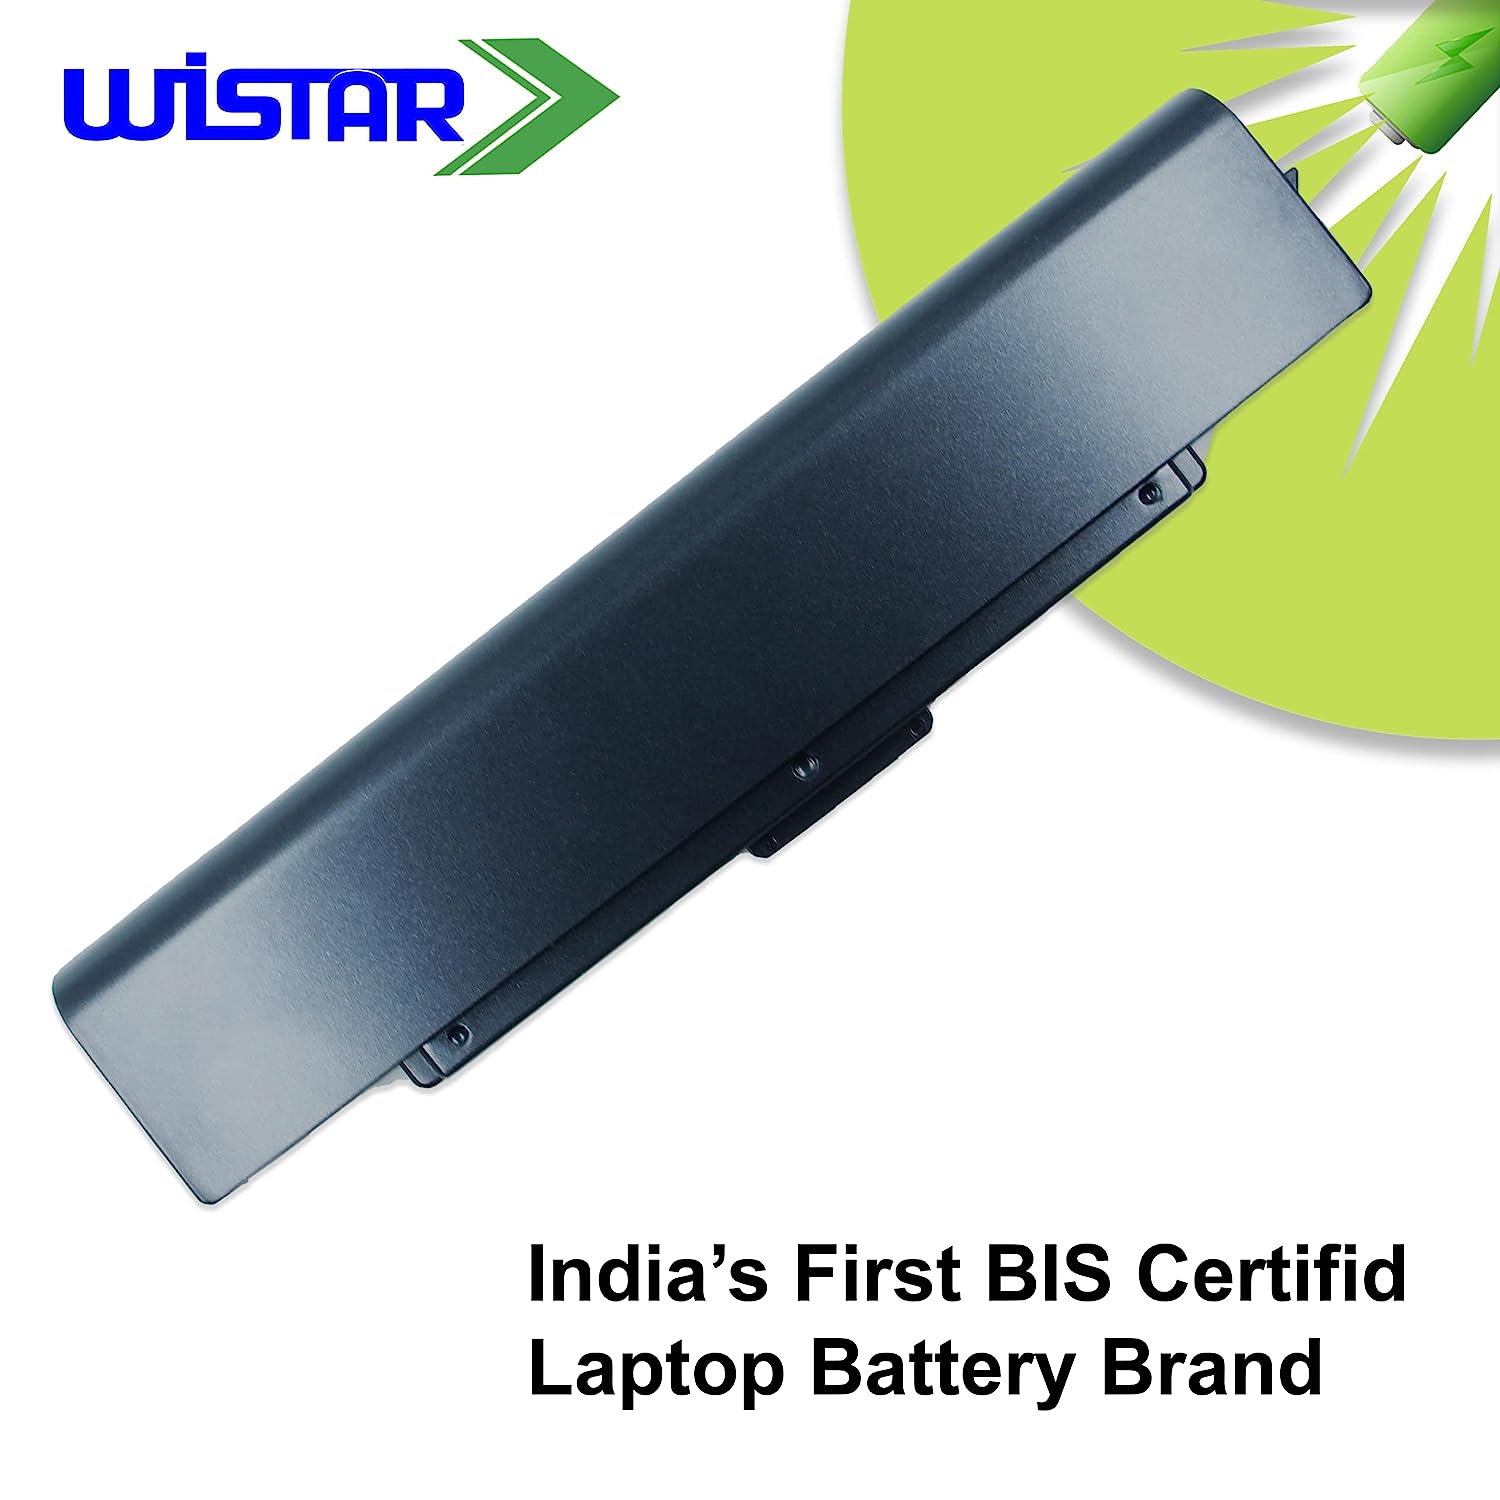 WISTAR Laptop Battery TKV2V Battery Compatible for Dell Inspiron N4030 N4020 N4030D Mini 1210 14V 04J99J 0FMHC1 0M4RNN 0PD3D2 312-1231 FMHC10 KG9KY W4FYY X3X3X